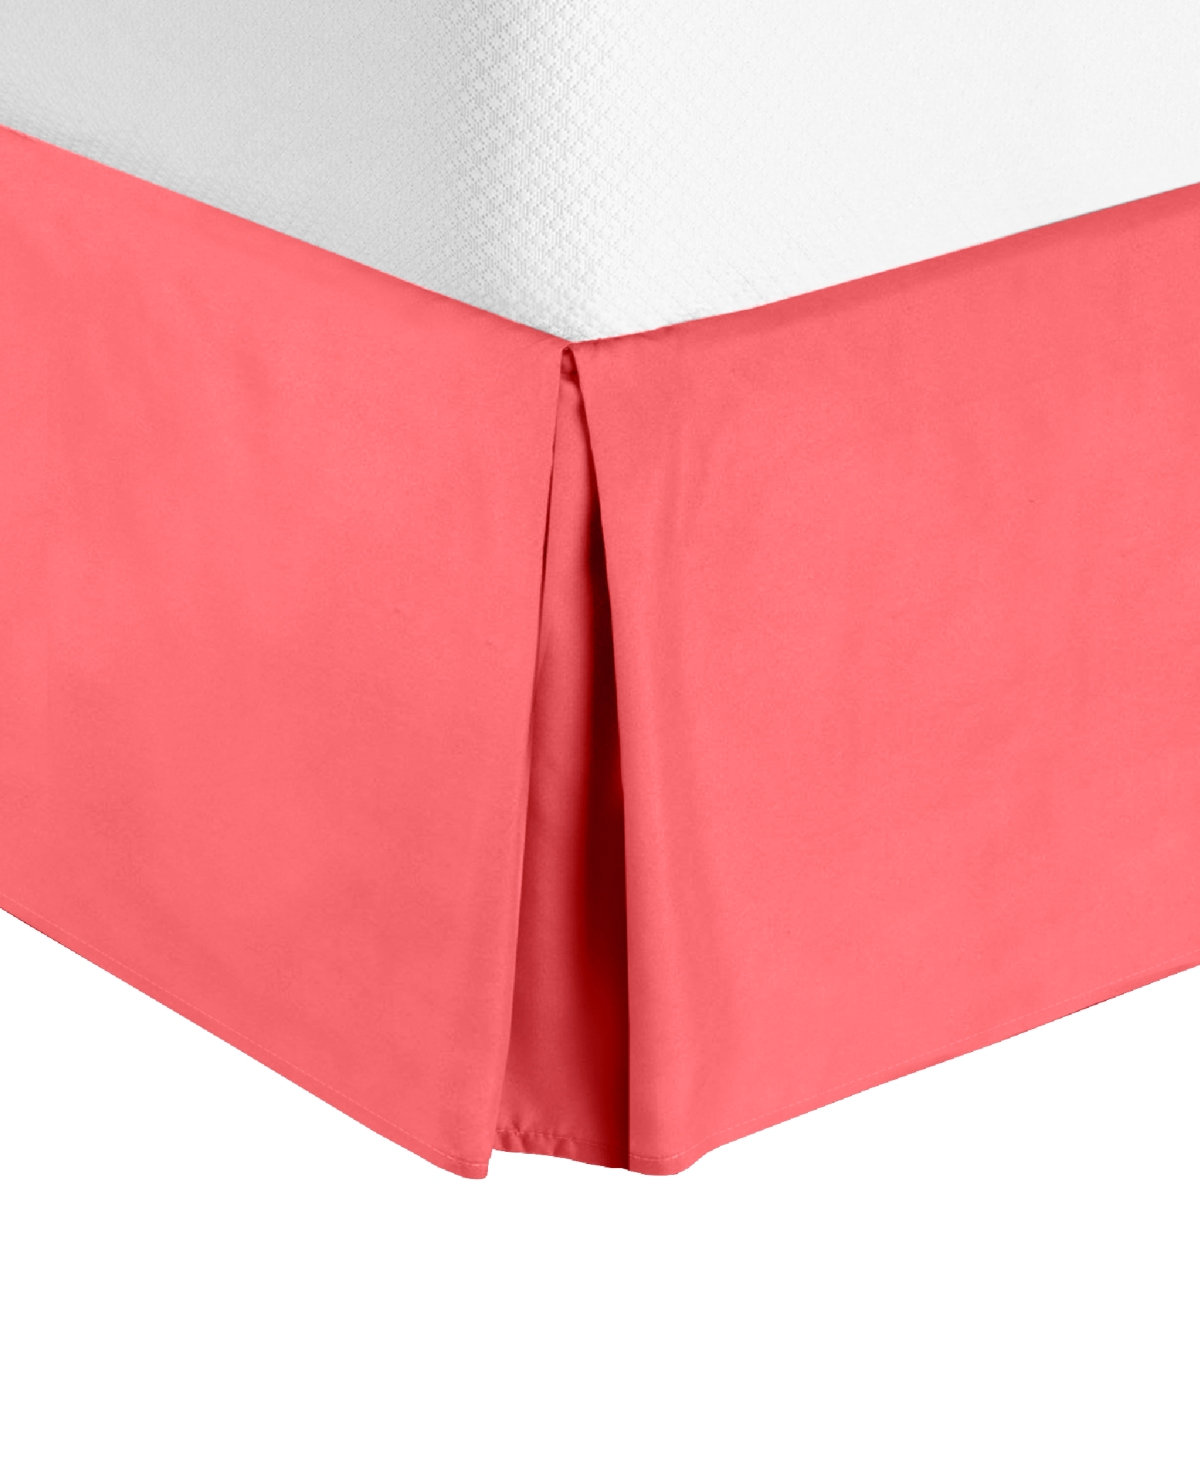 Nestl Bedding Bedding 14" Tailored Drop Premium Bedskirt, California King In Coral Pink